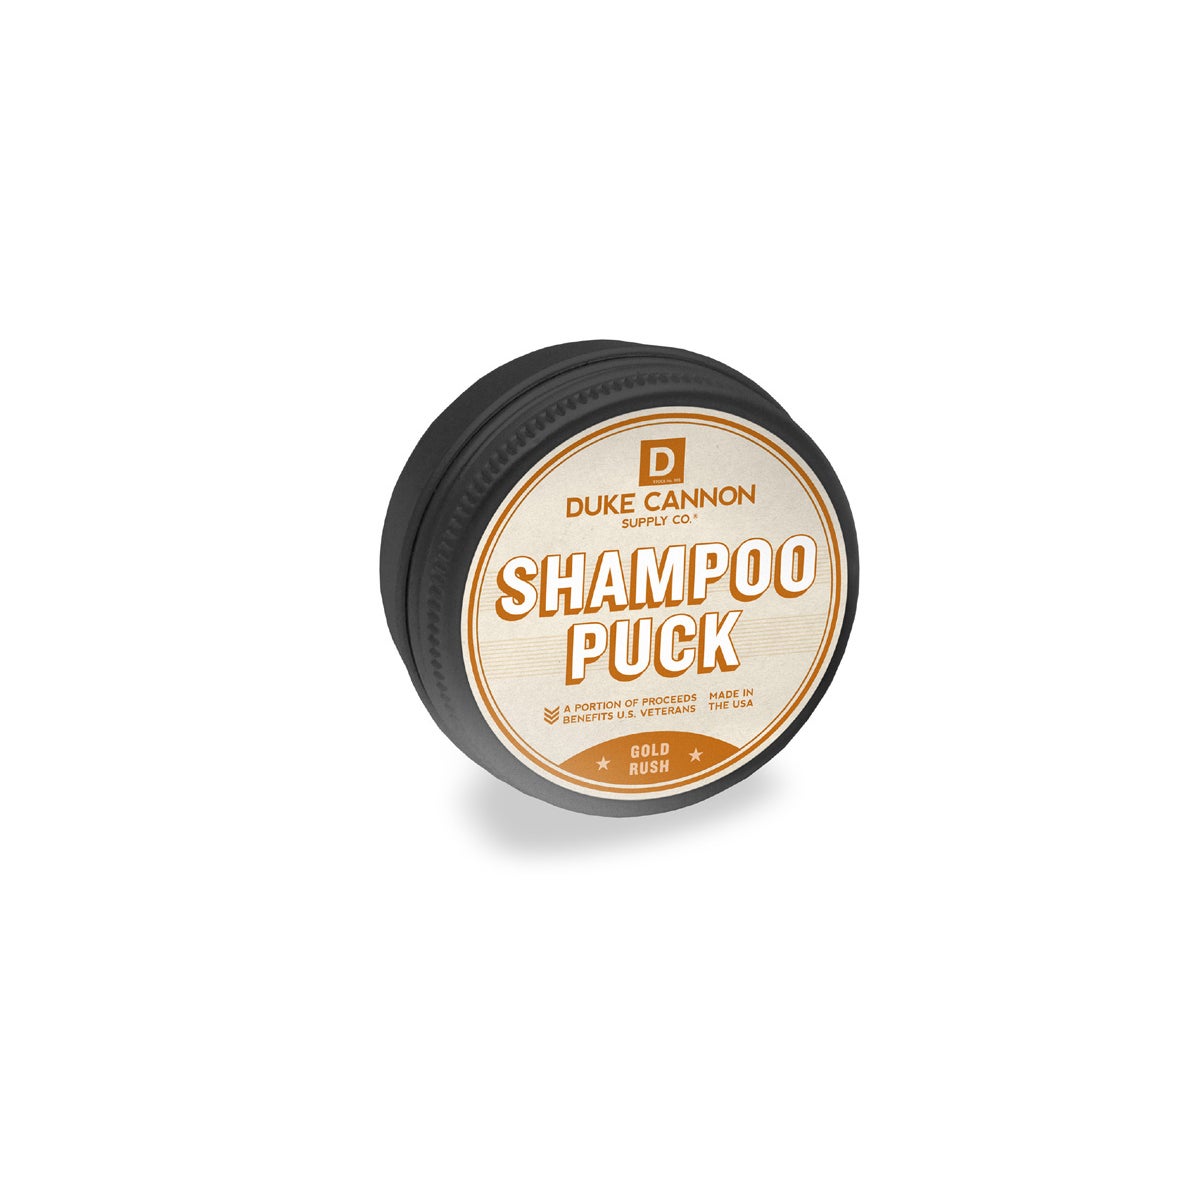 Shampoo Puck Gold Rush - Scent: Fresh Citrus, Neroli, & Oakmoss